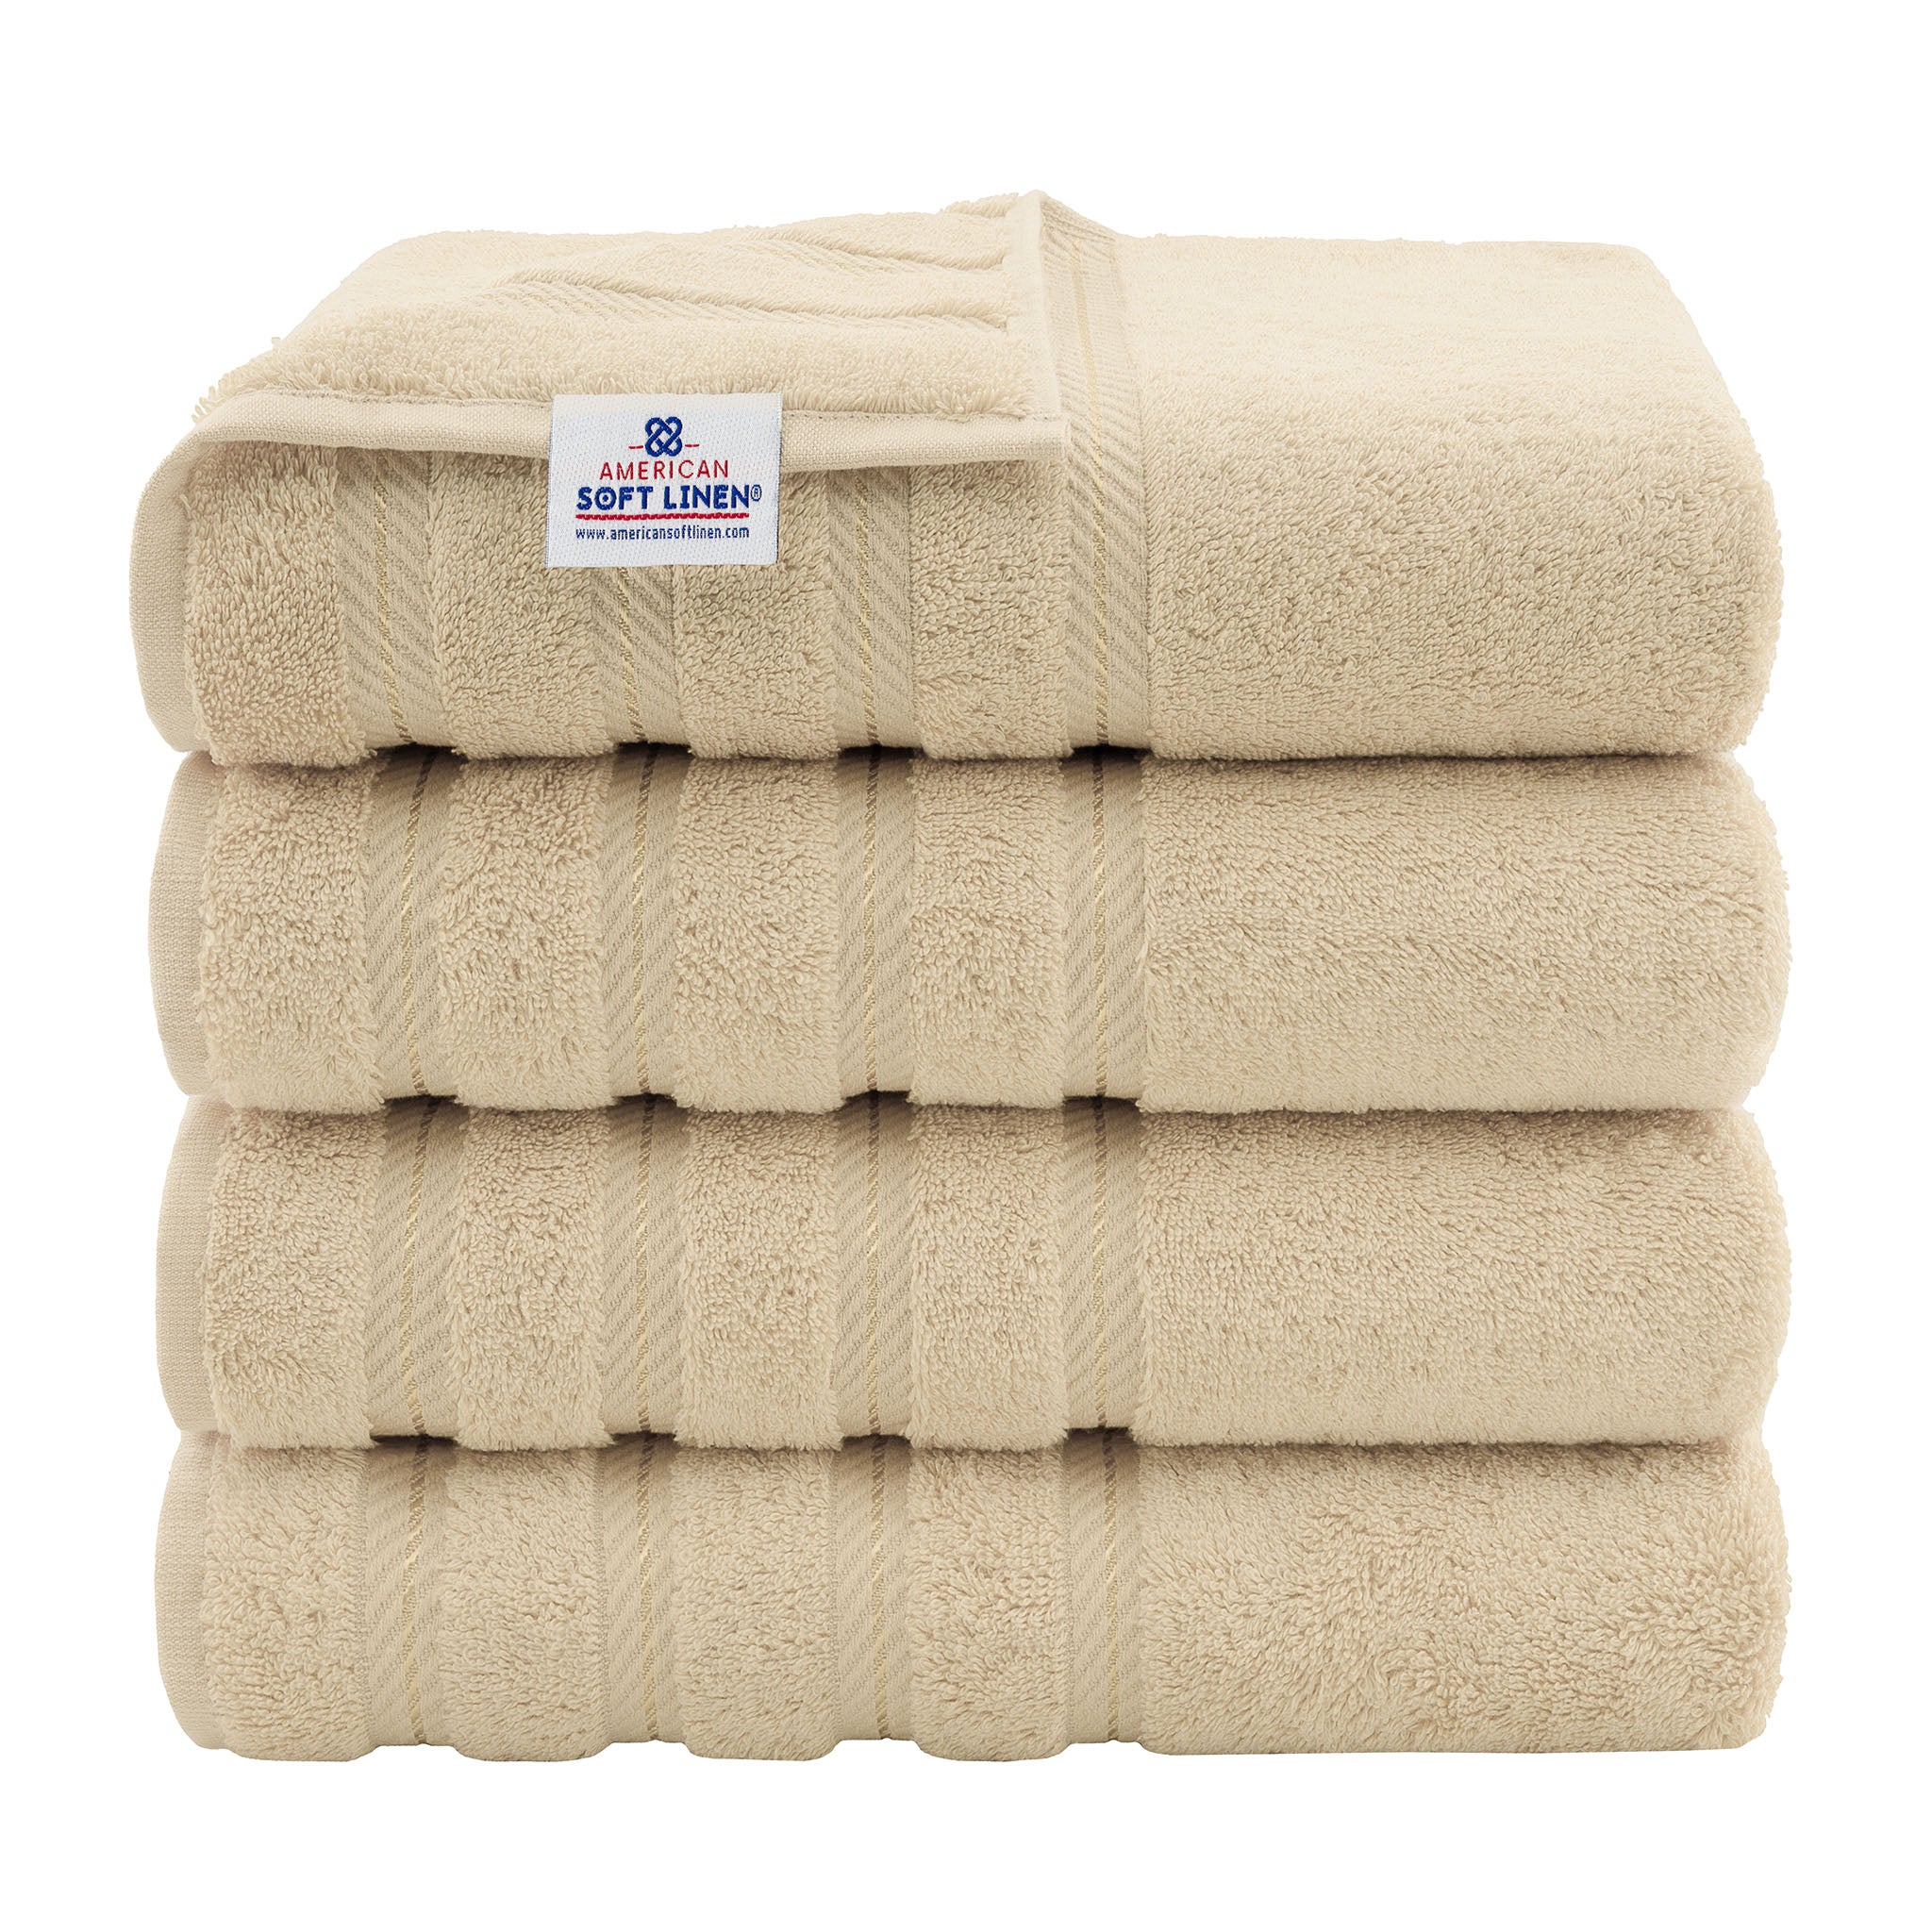 American Soft Linen Bath Towel Set, 4-Piece 100% Turkish Cotton Bath Towels,  27 x 54 in. Super Soft Towels for Bathroom, Malibu Peach Ed-4Bath-Mal2-E124  - The Home Depot